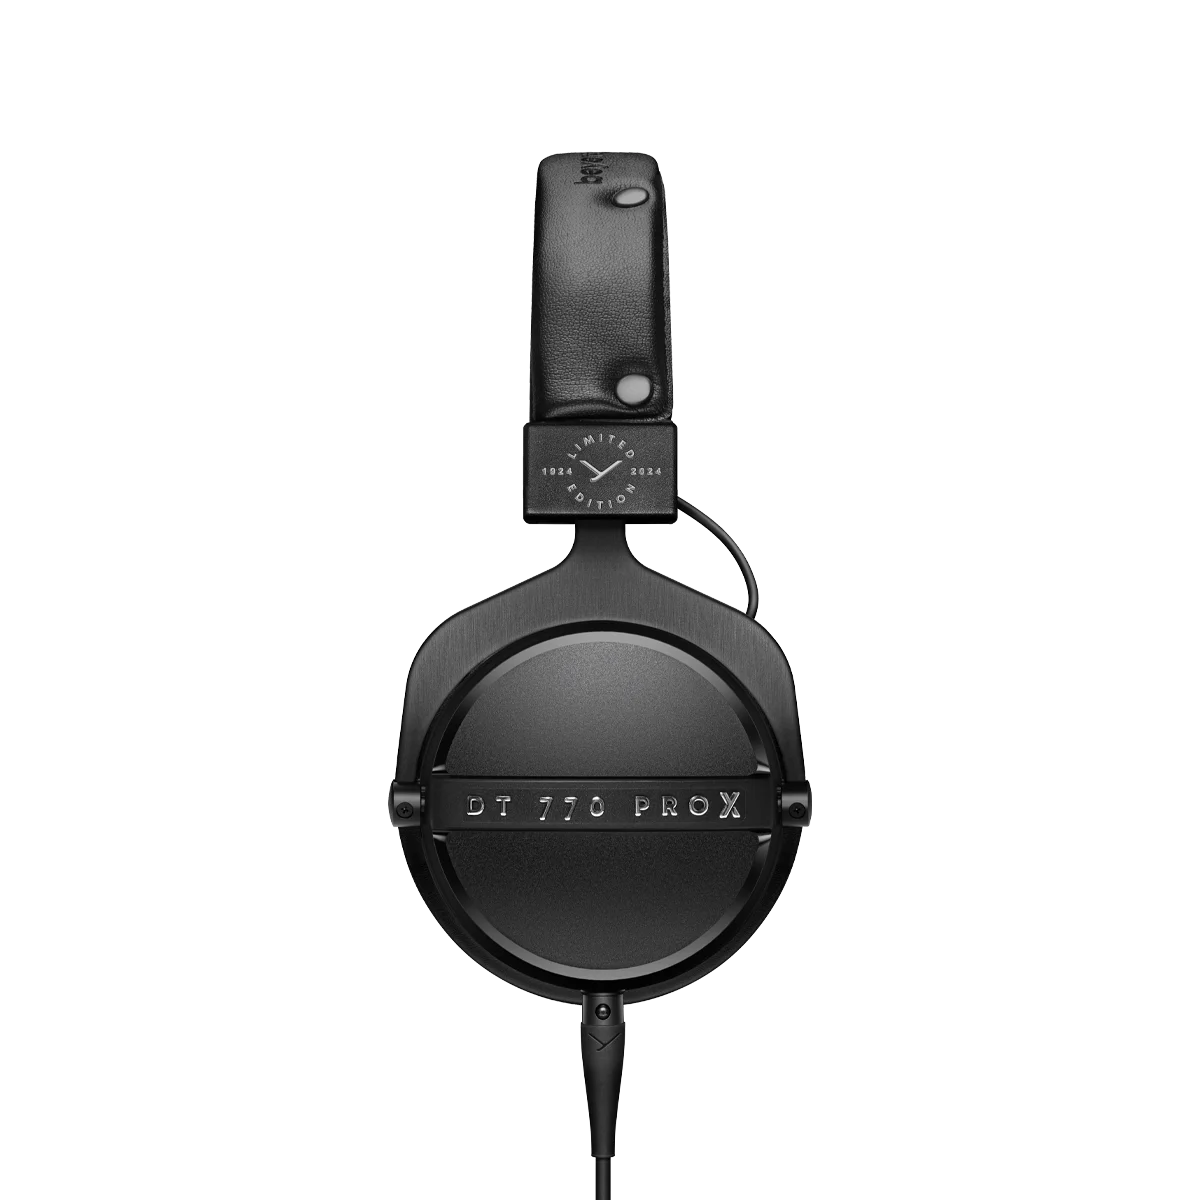 Beyerdynamic Dt 770 Pro-x Century Edition - Closed headset - Variation 2